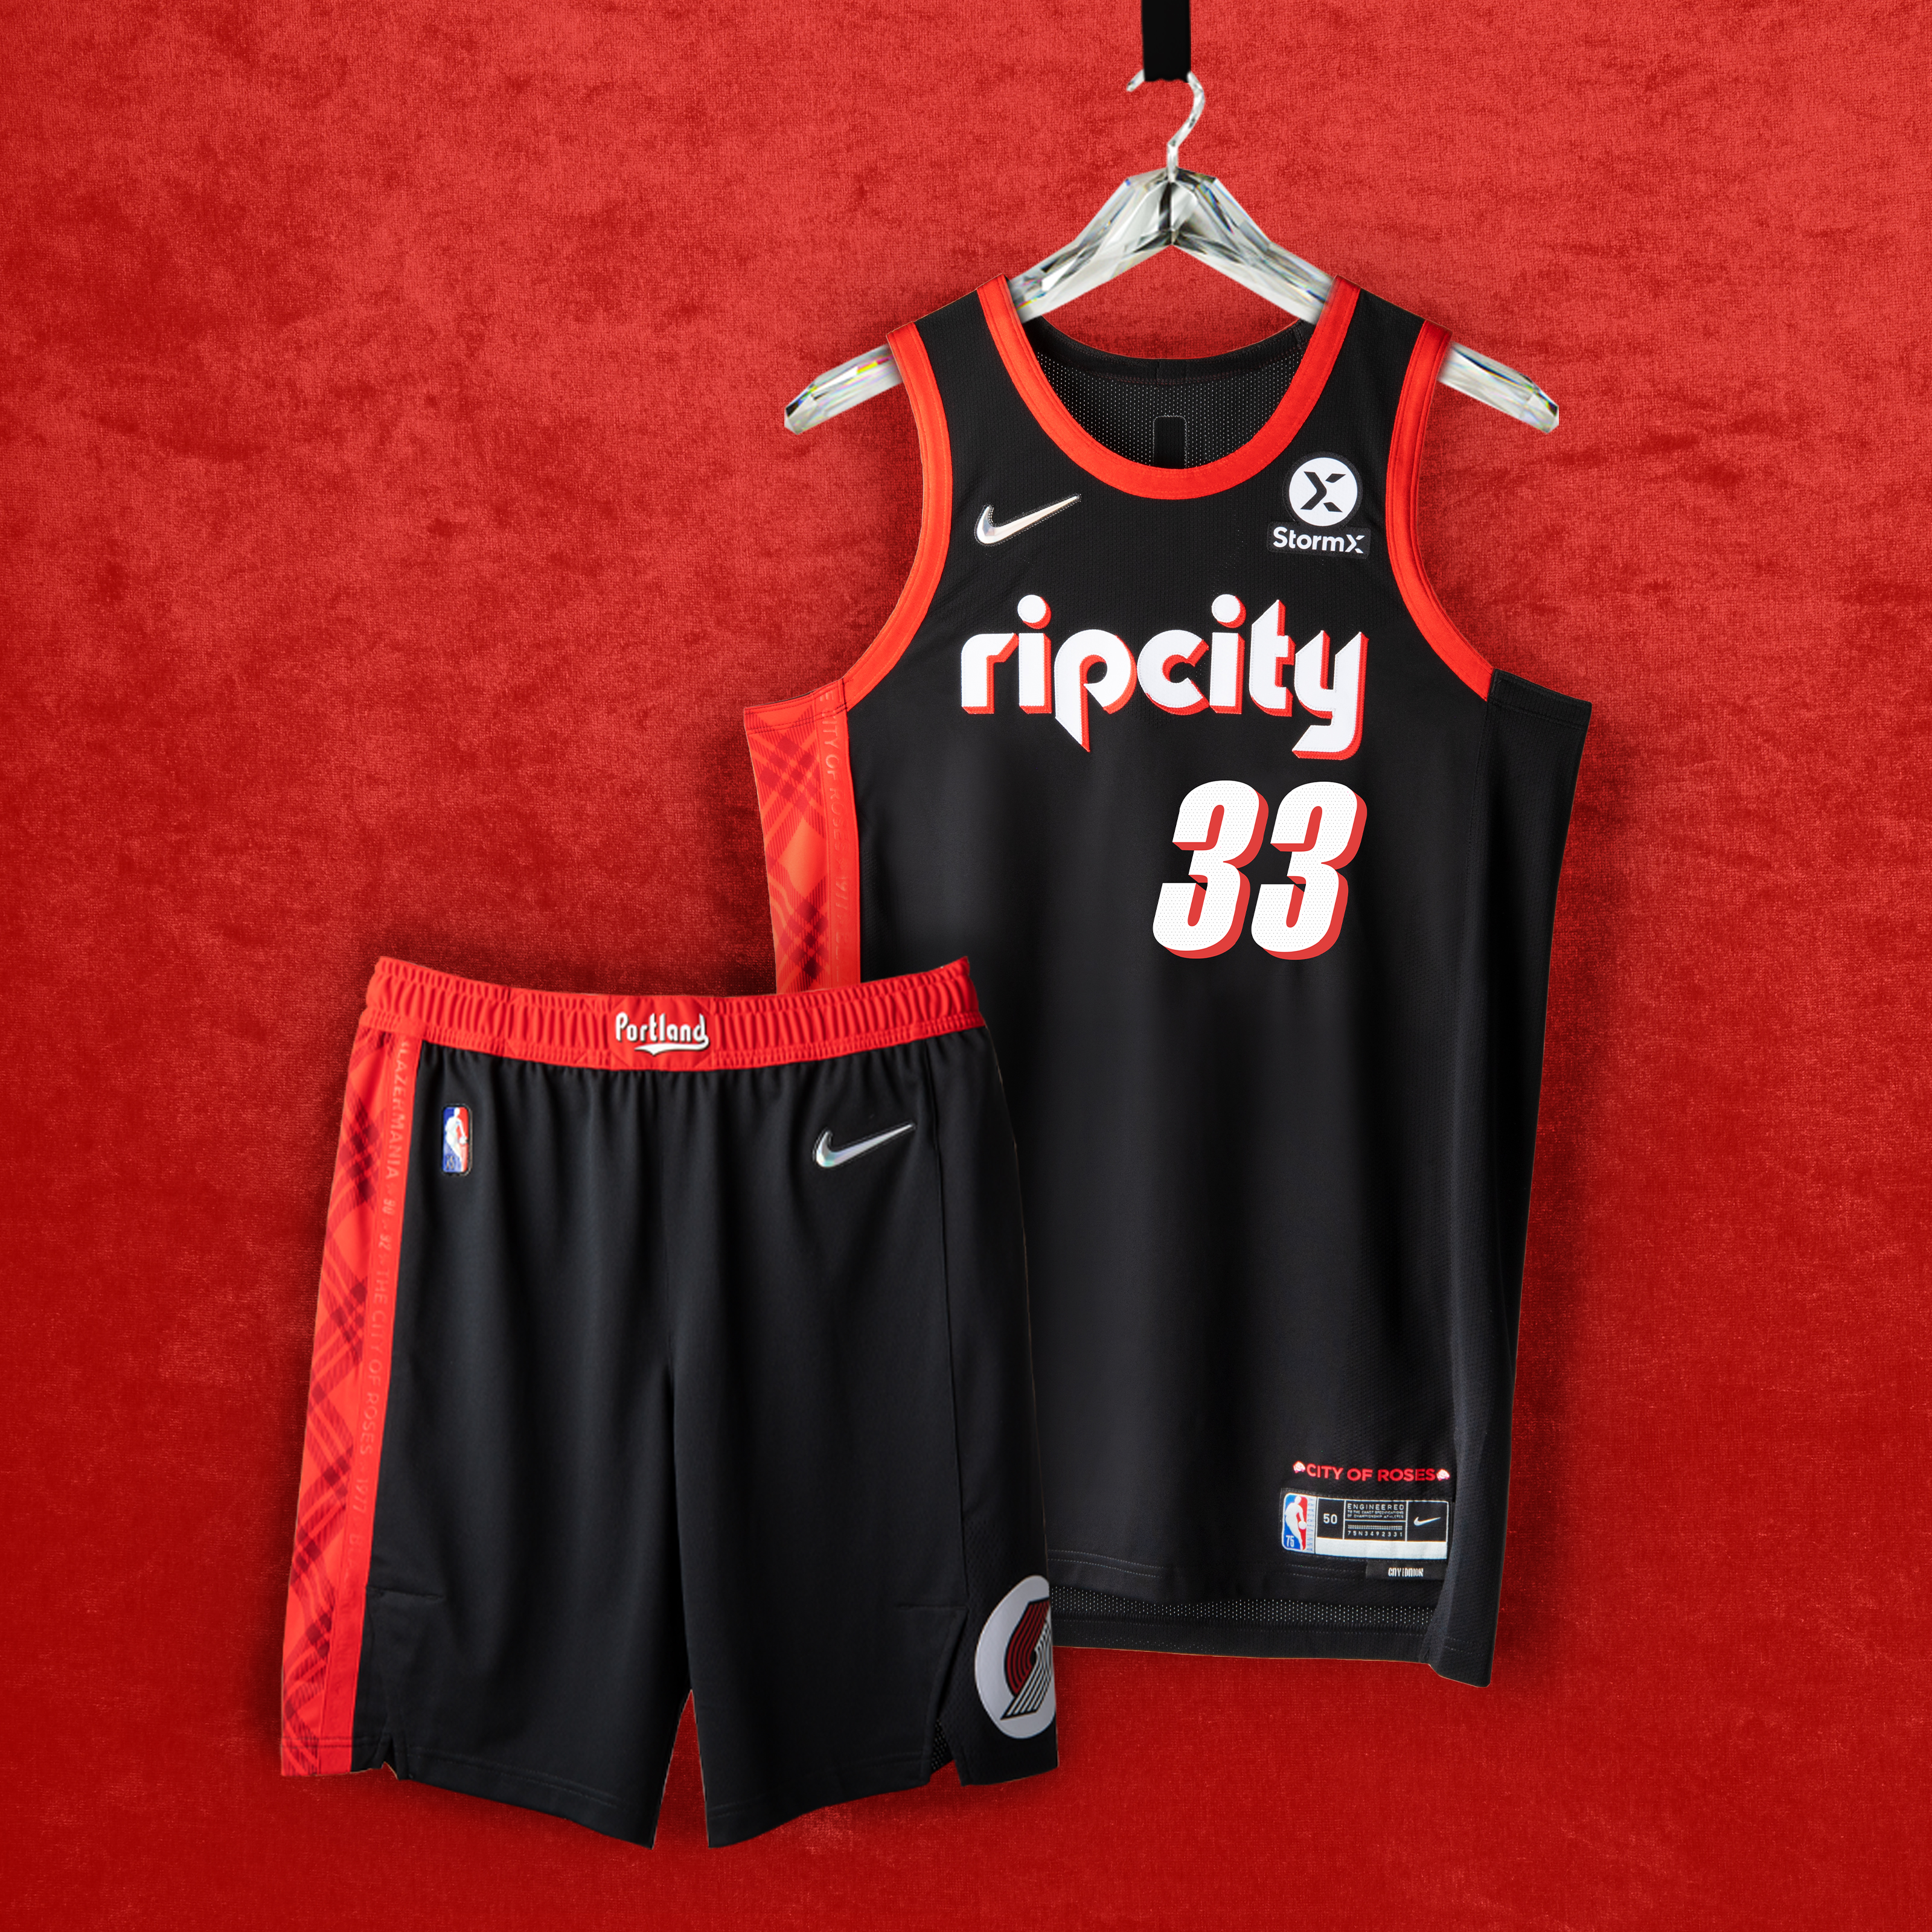 NBA, Nike unveil 75th anniversary City Edition jerseys